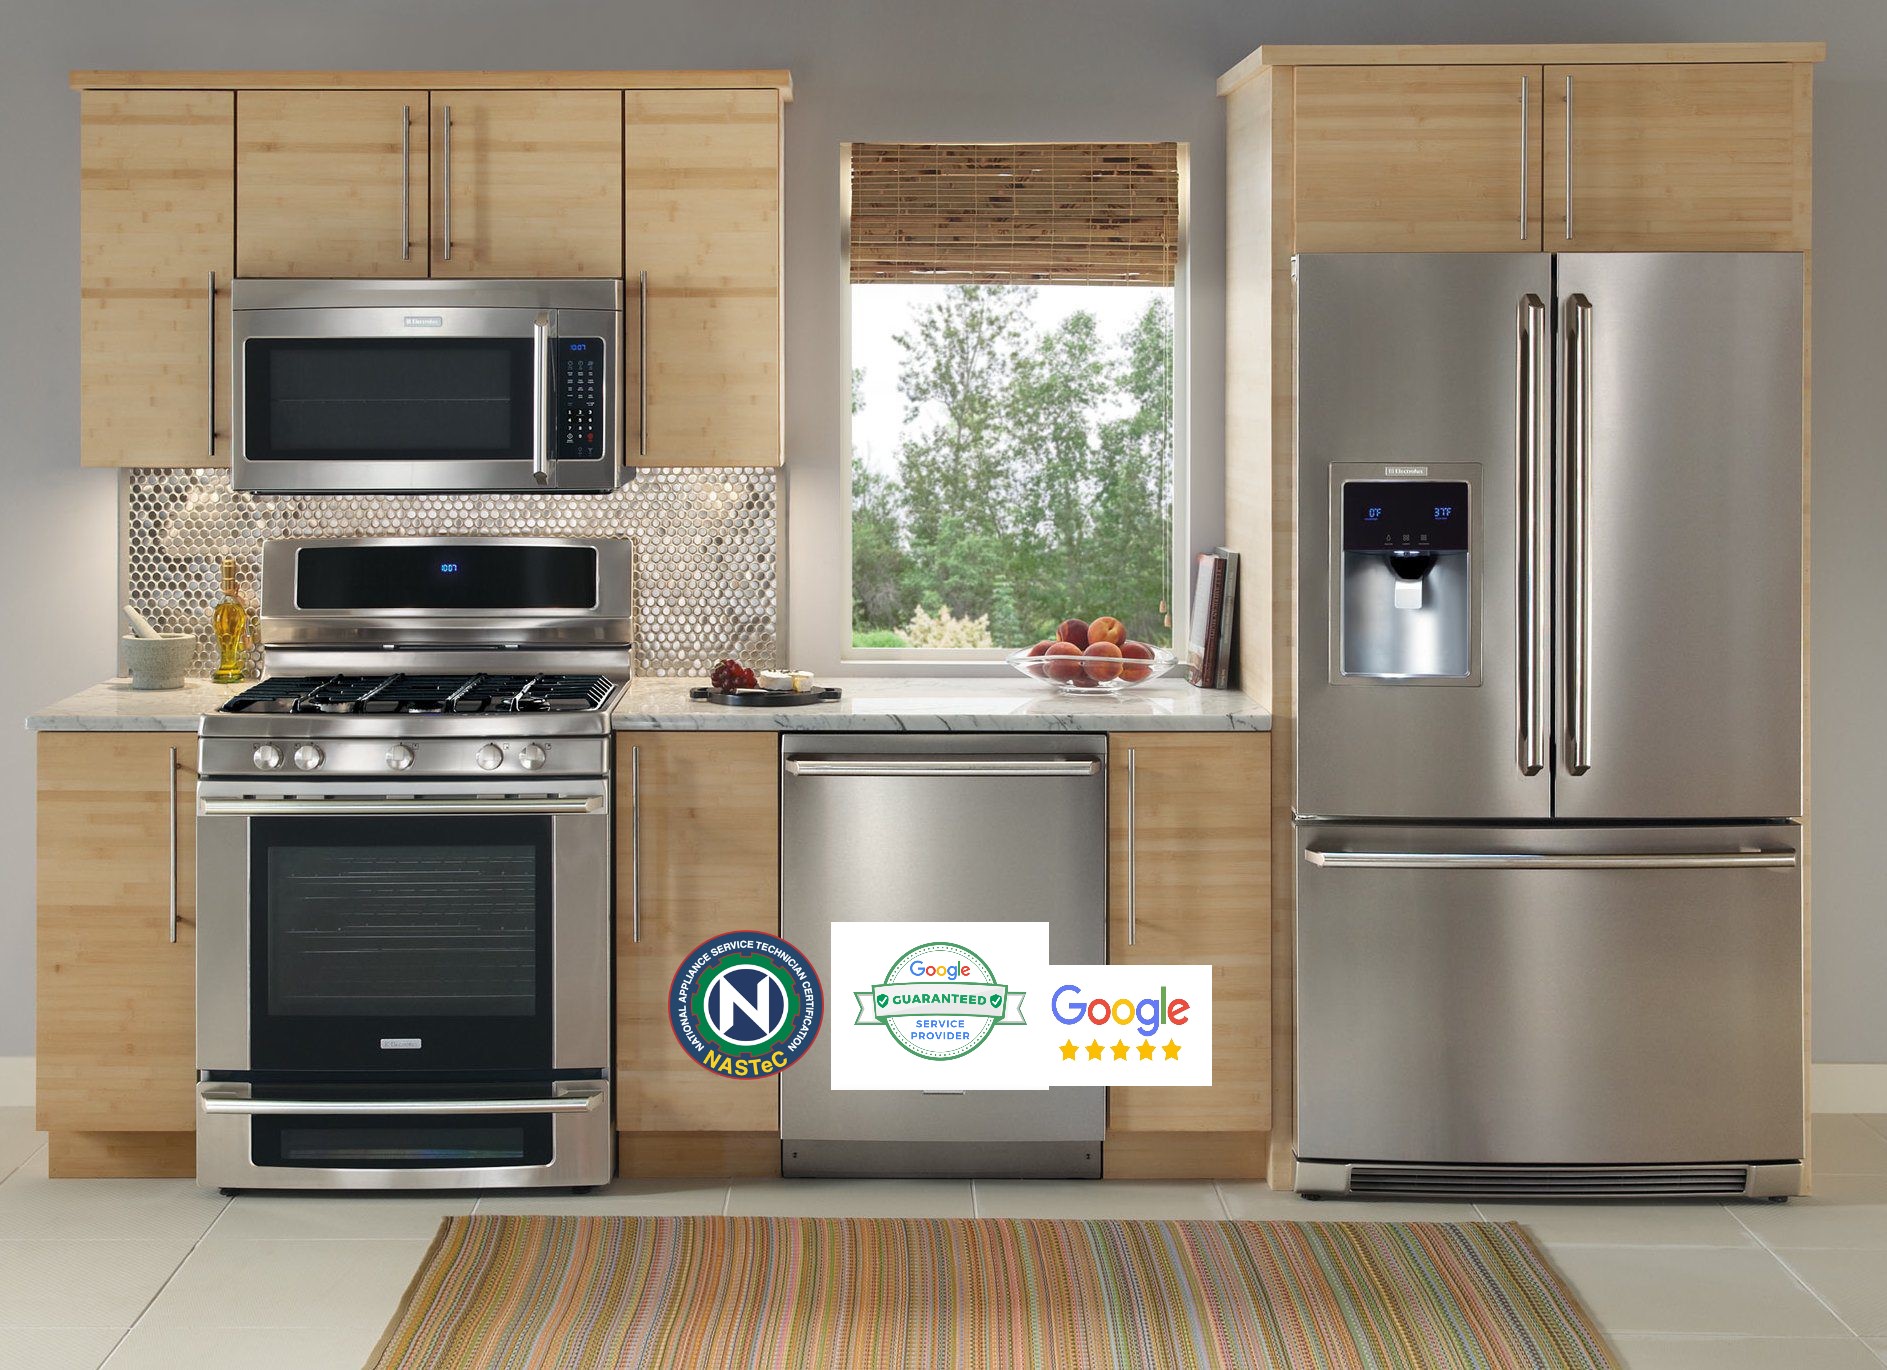 822-817-817-710-710-r396-4-piece-stainless-steel-kitchen-appliance-package-1-17116405524097.jpg